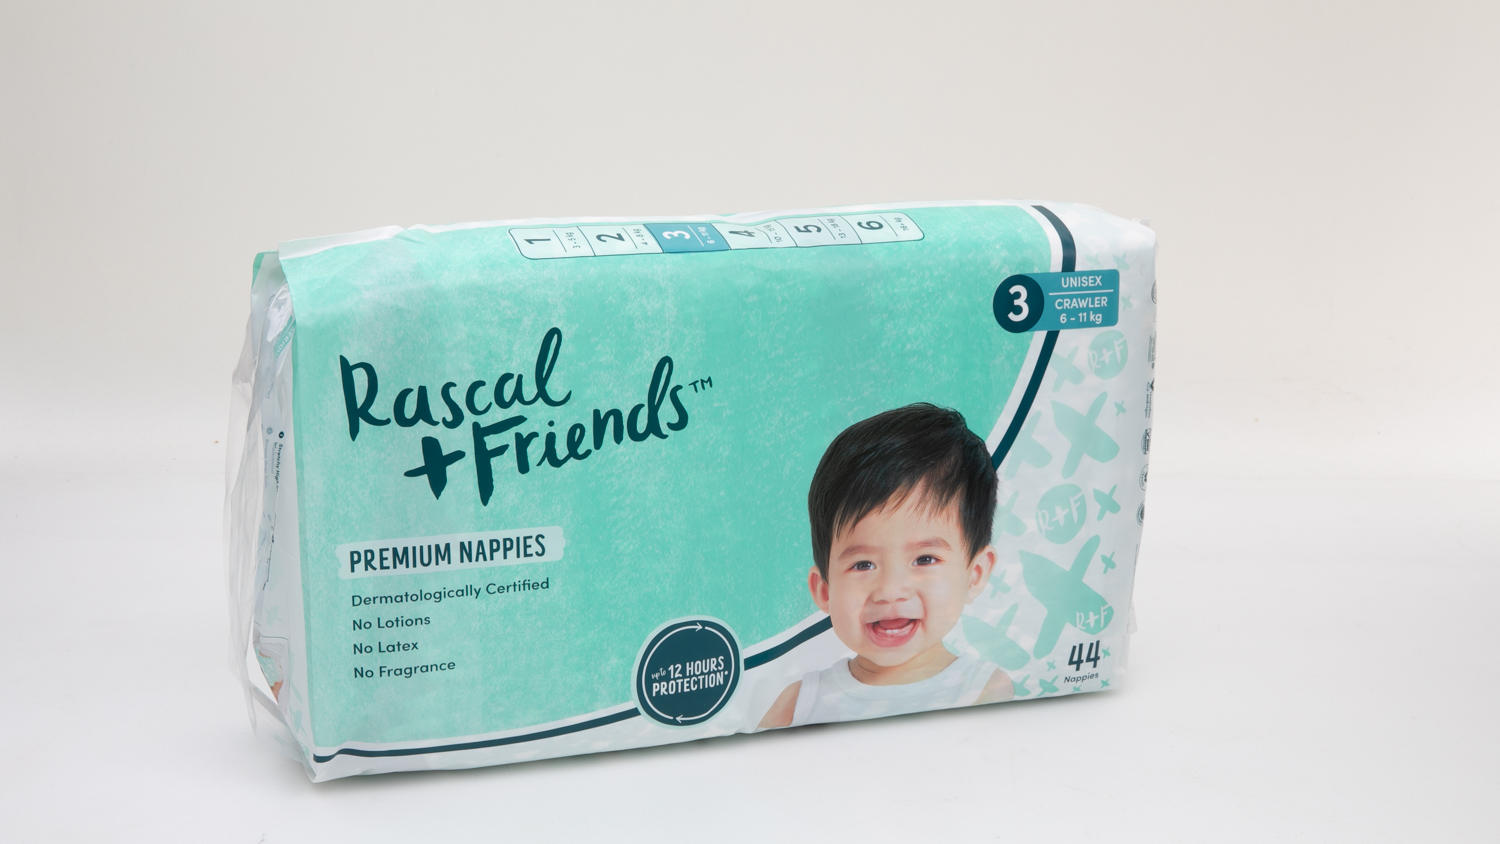 Rascal + Friends Premium Nappies Unisex Crawler Size 3 carousel image